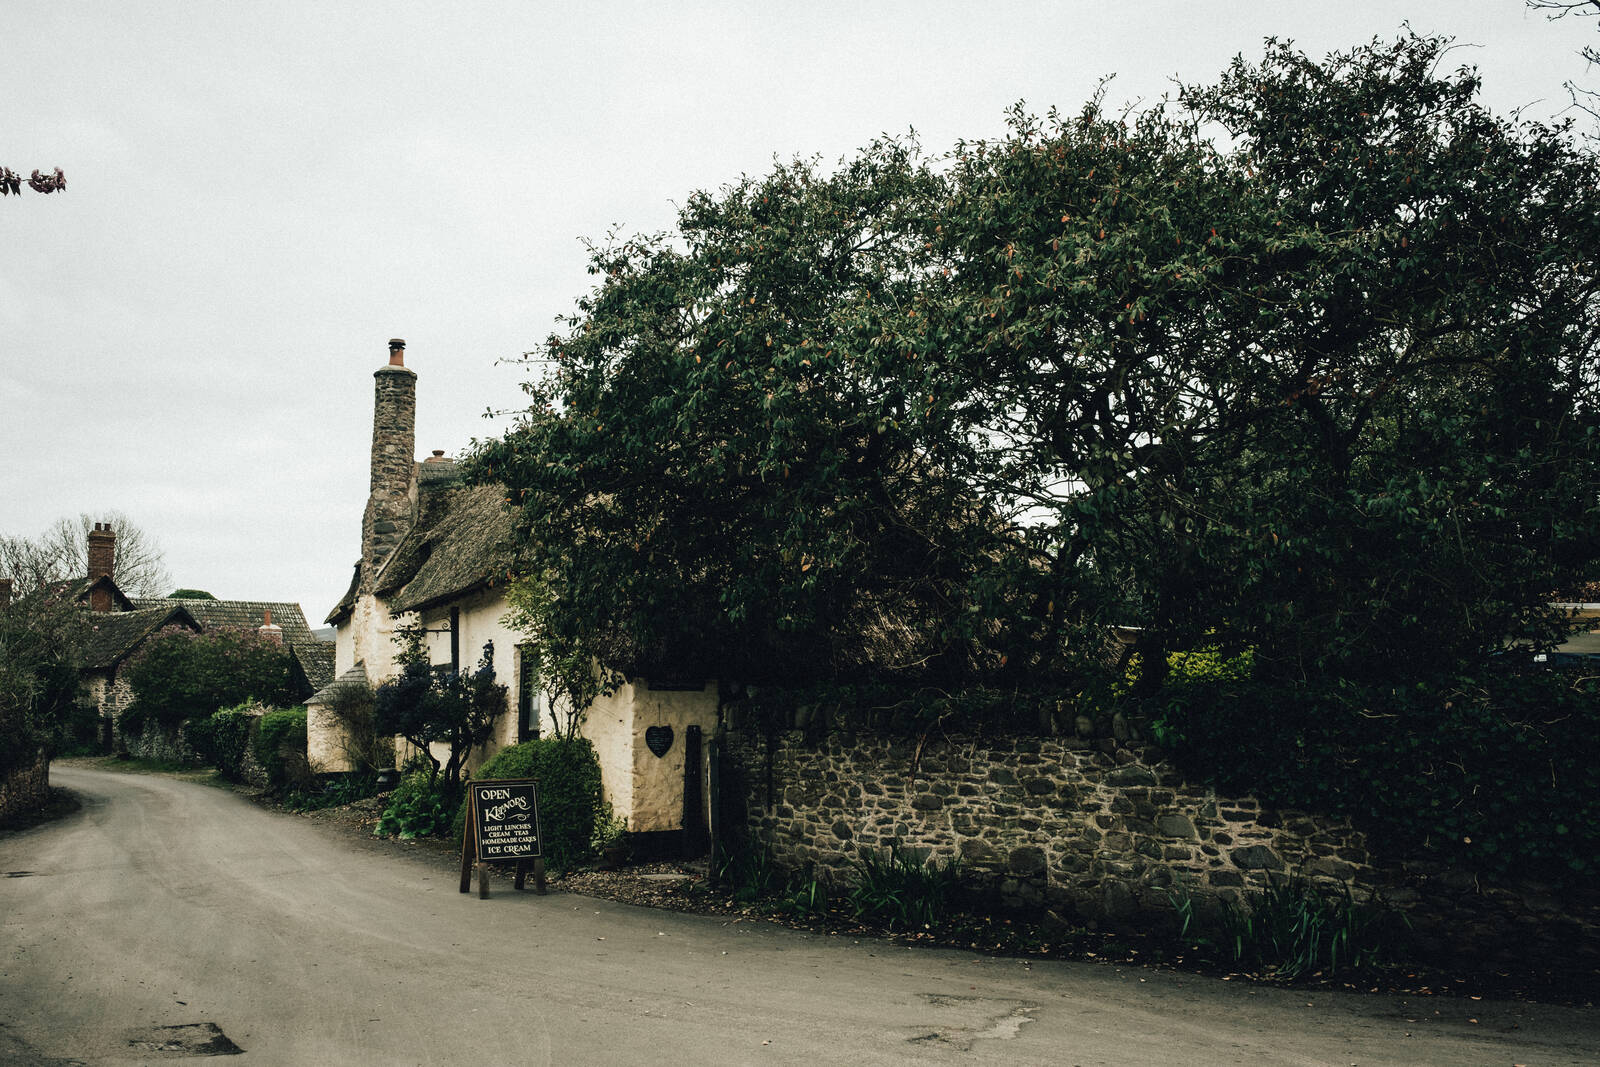 Image of Bossington Village by Dan Rayner